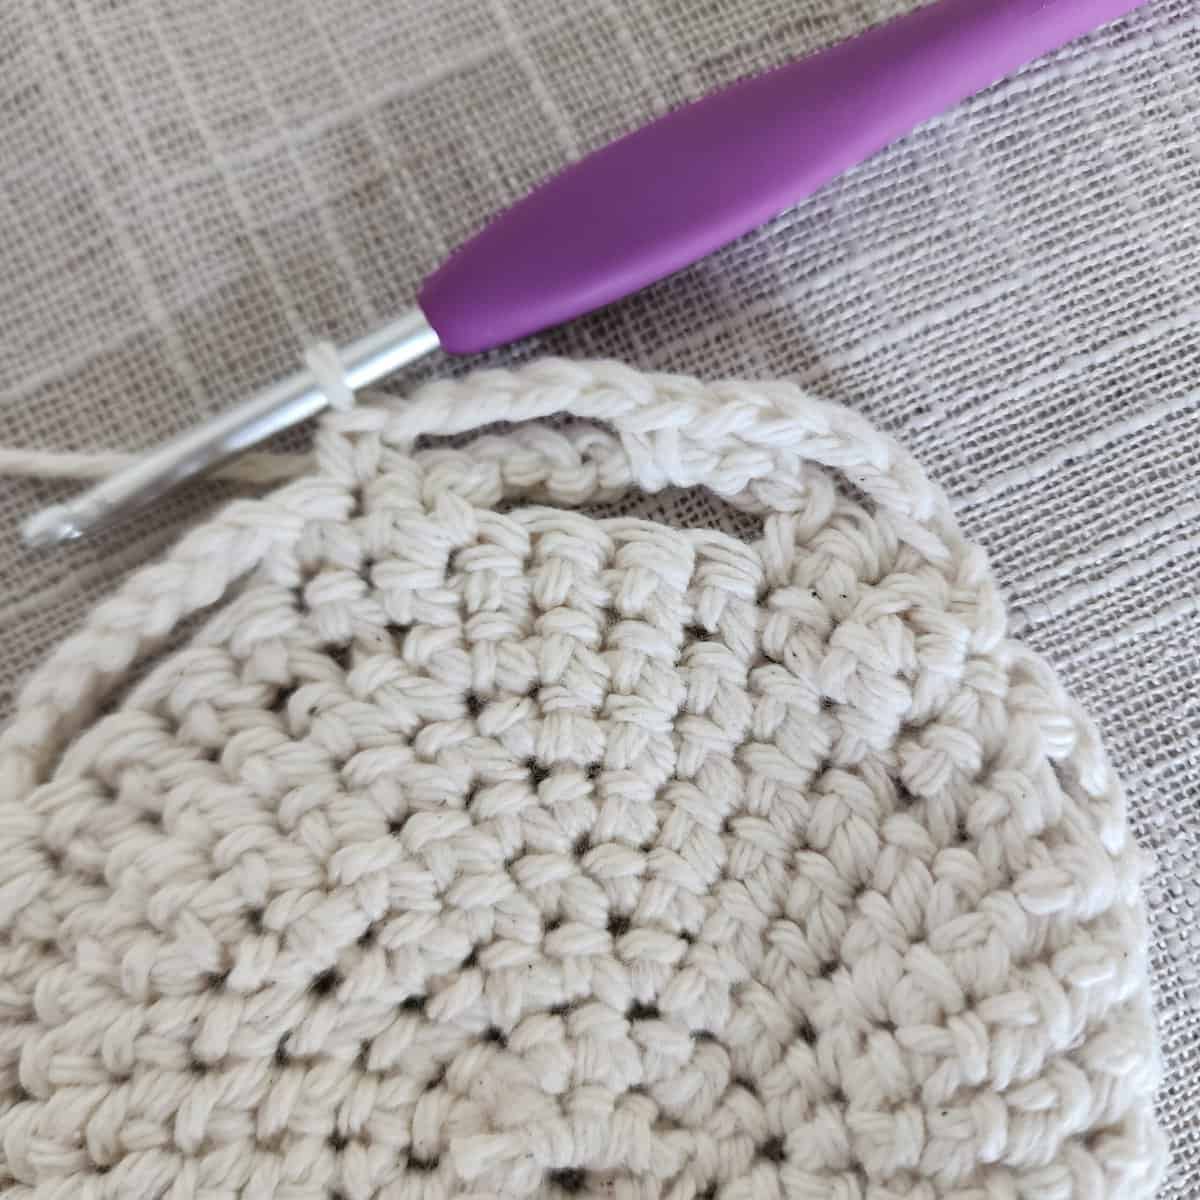 Close up of crochet lace pattern on plant basket.